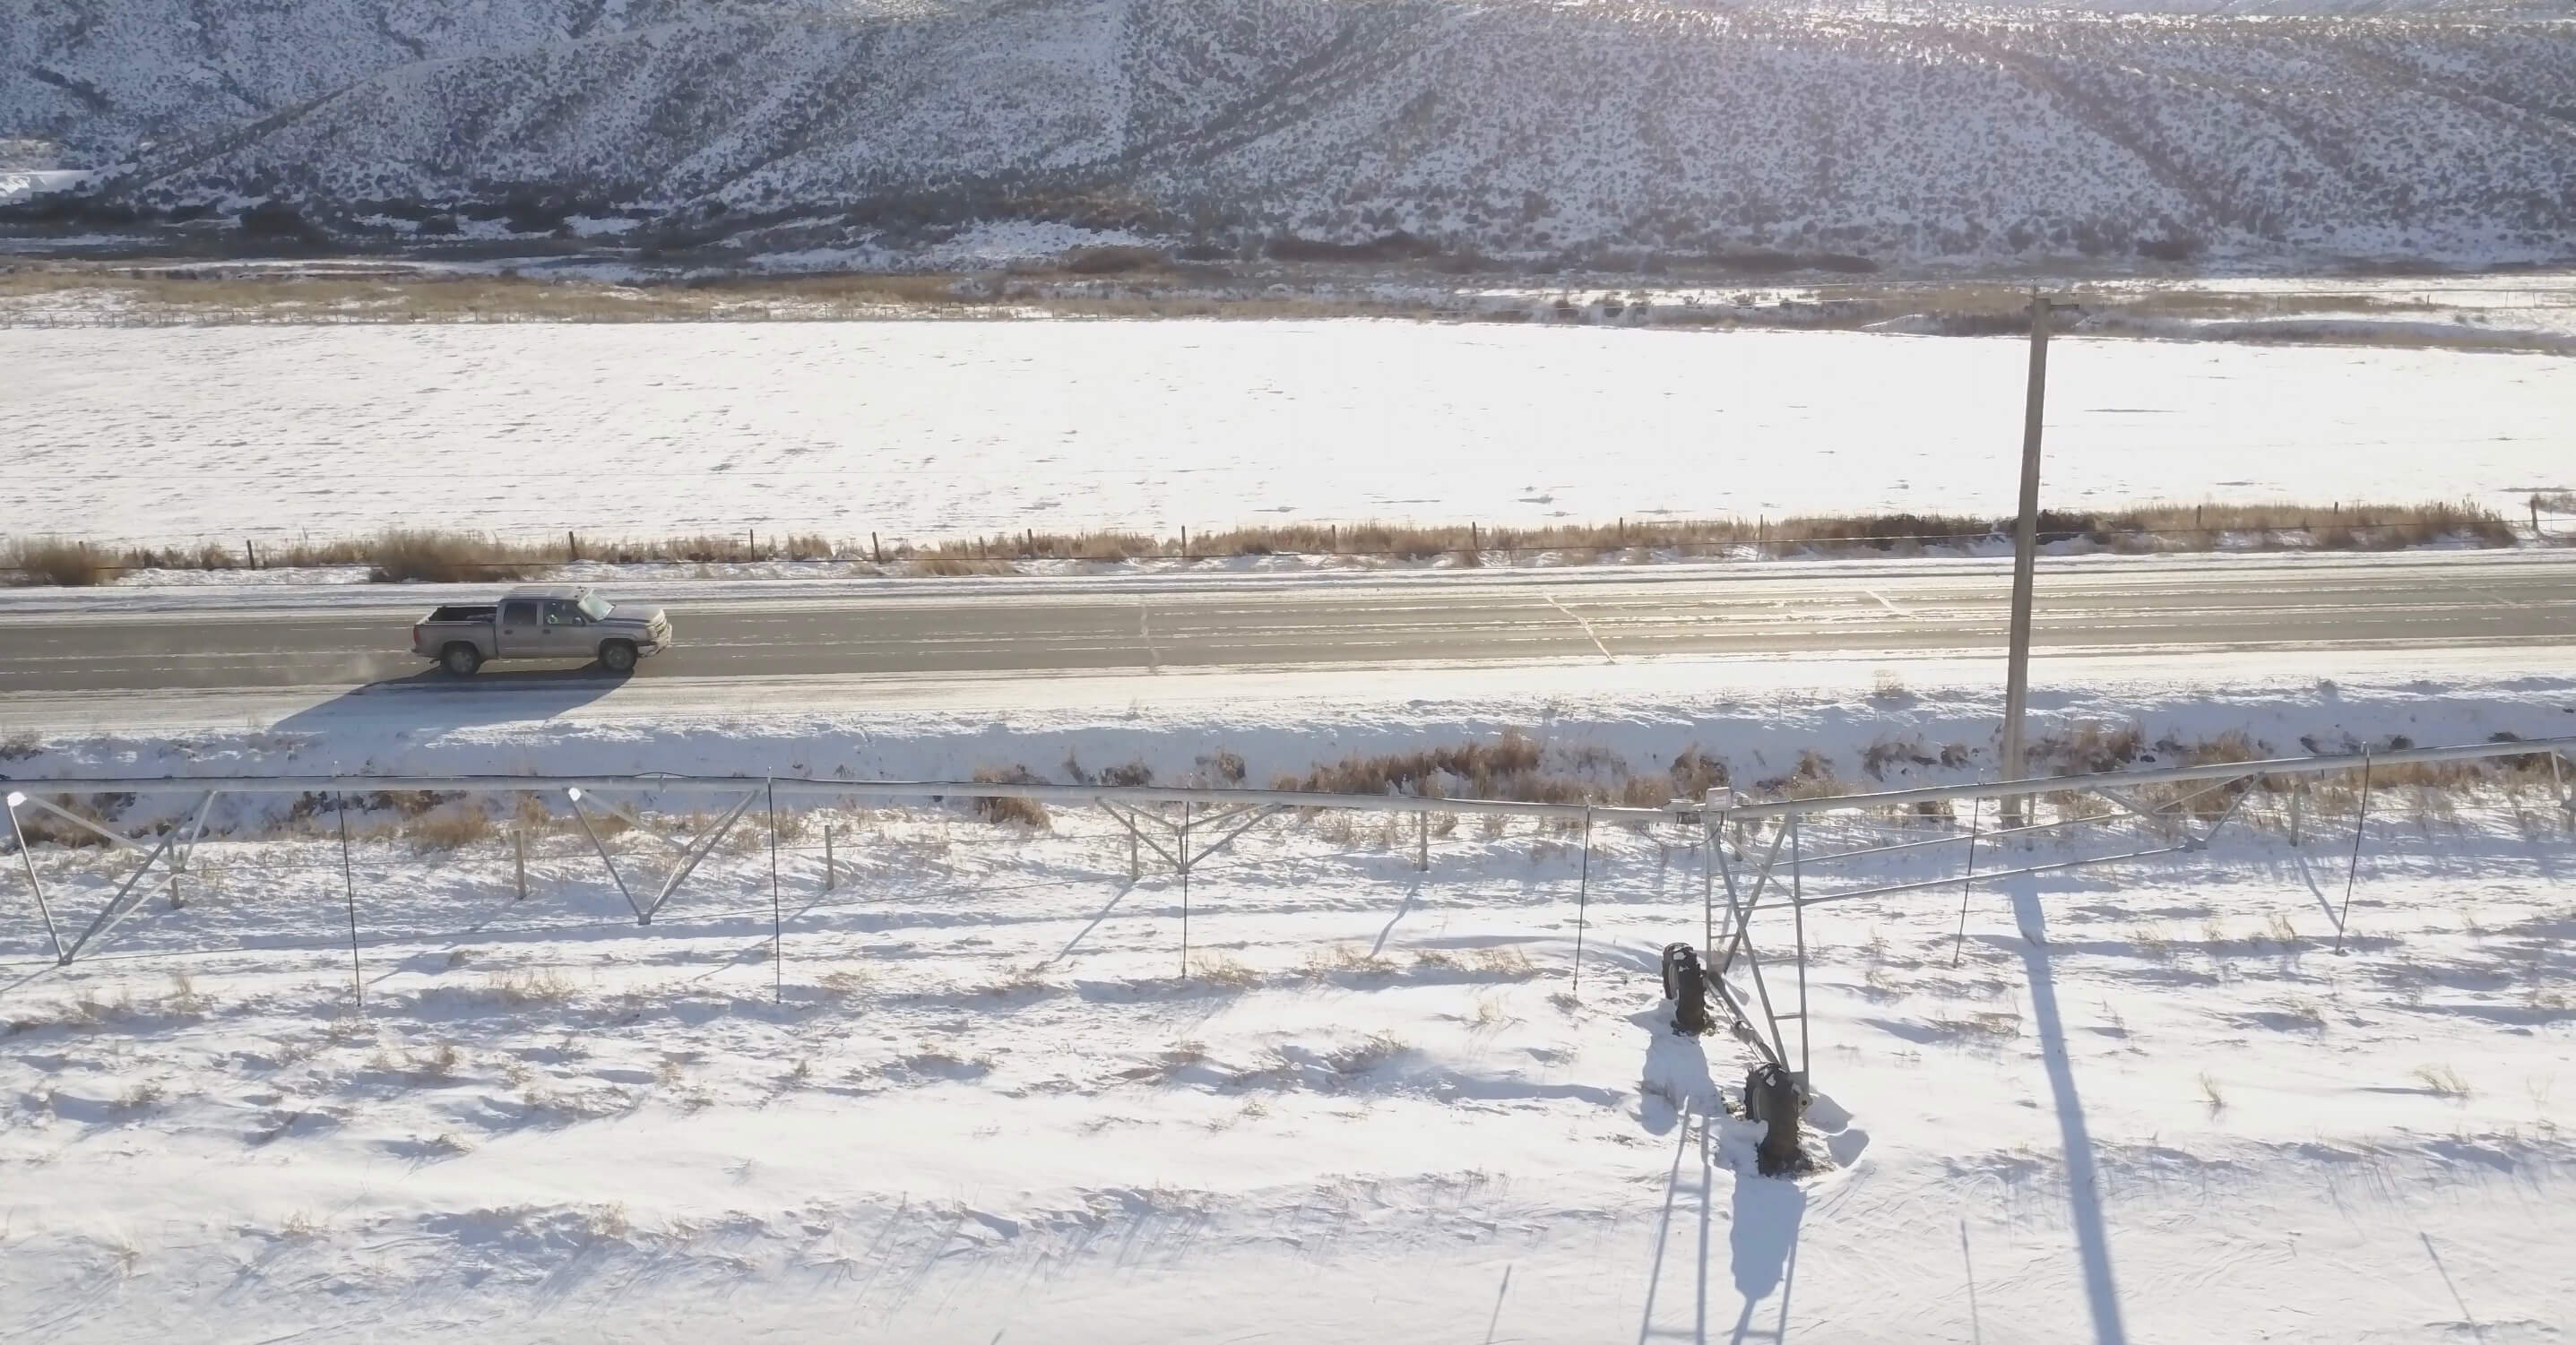 Snowy Canadian landscape with Kieran Nikula driving